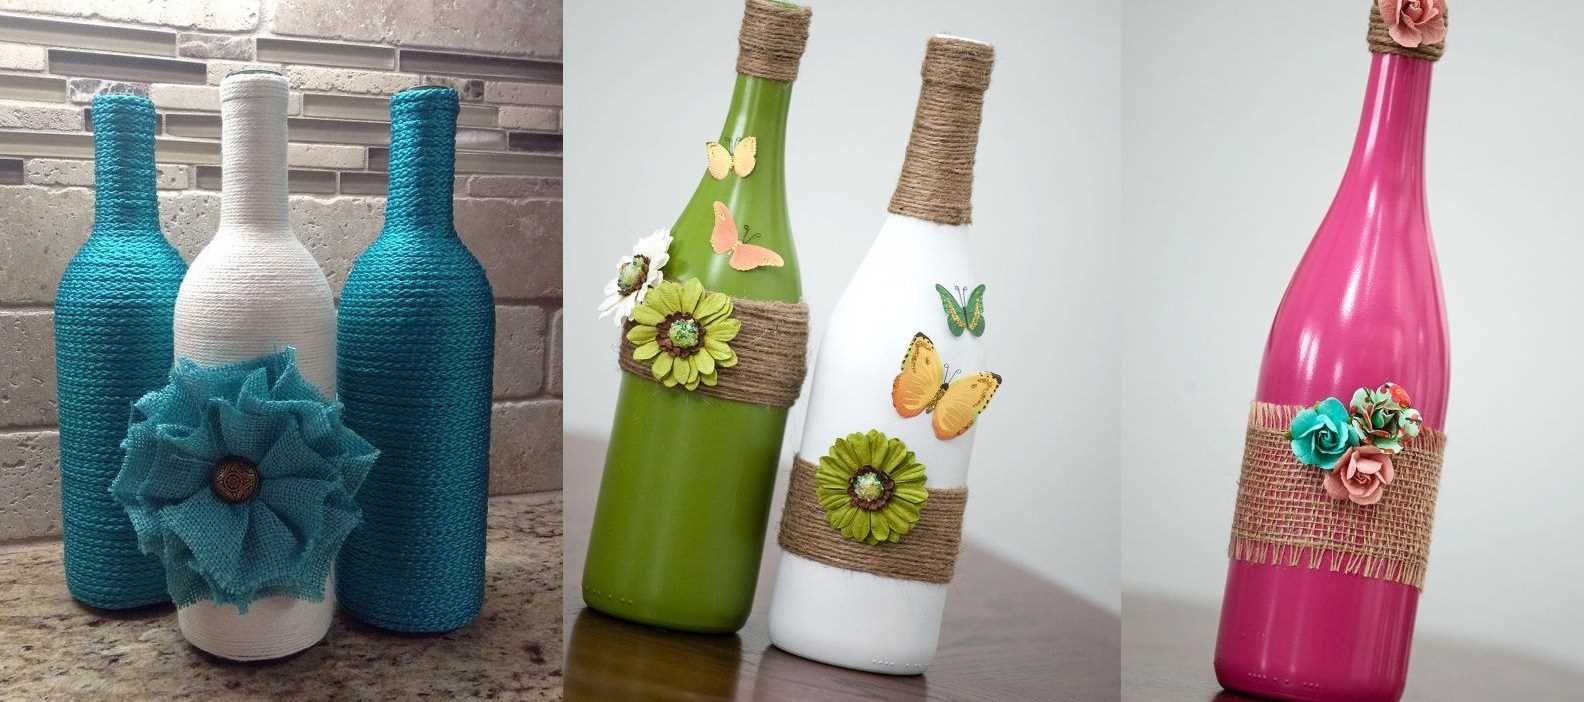 the idea of ​​stylishly decorating bottles with beads